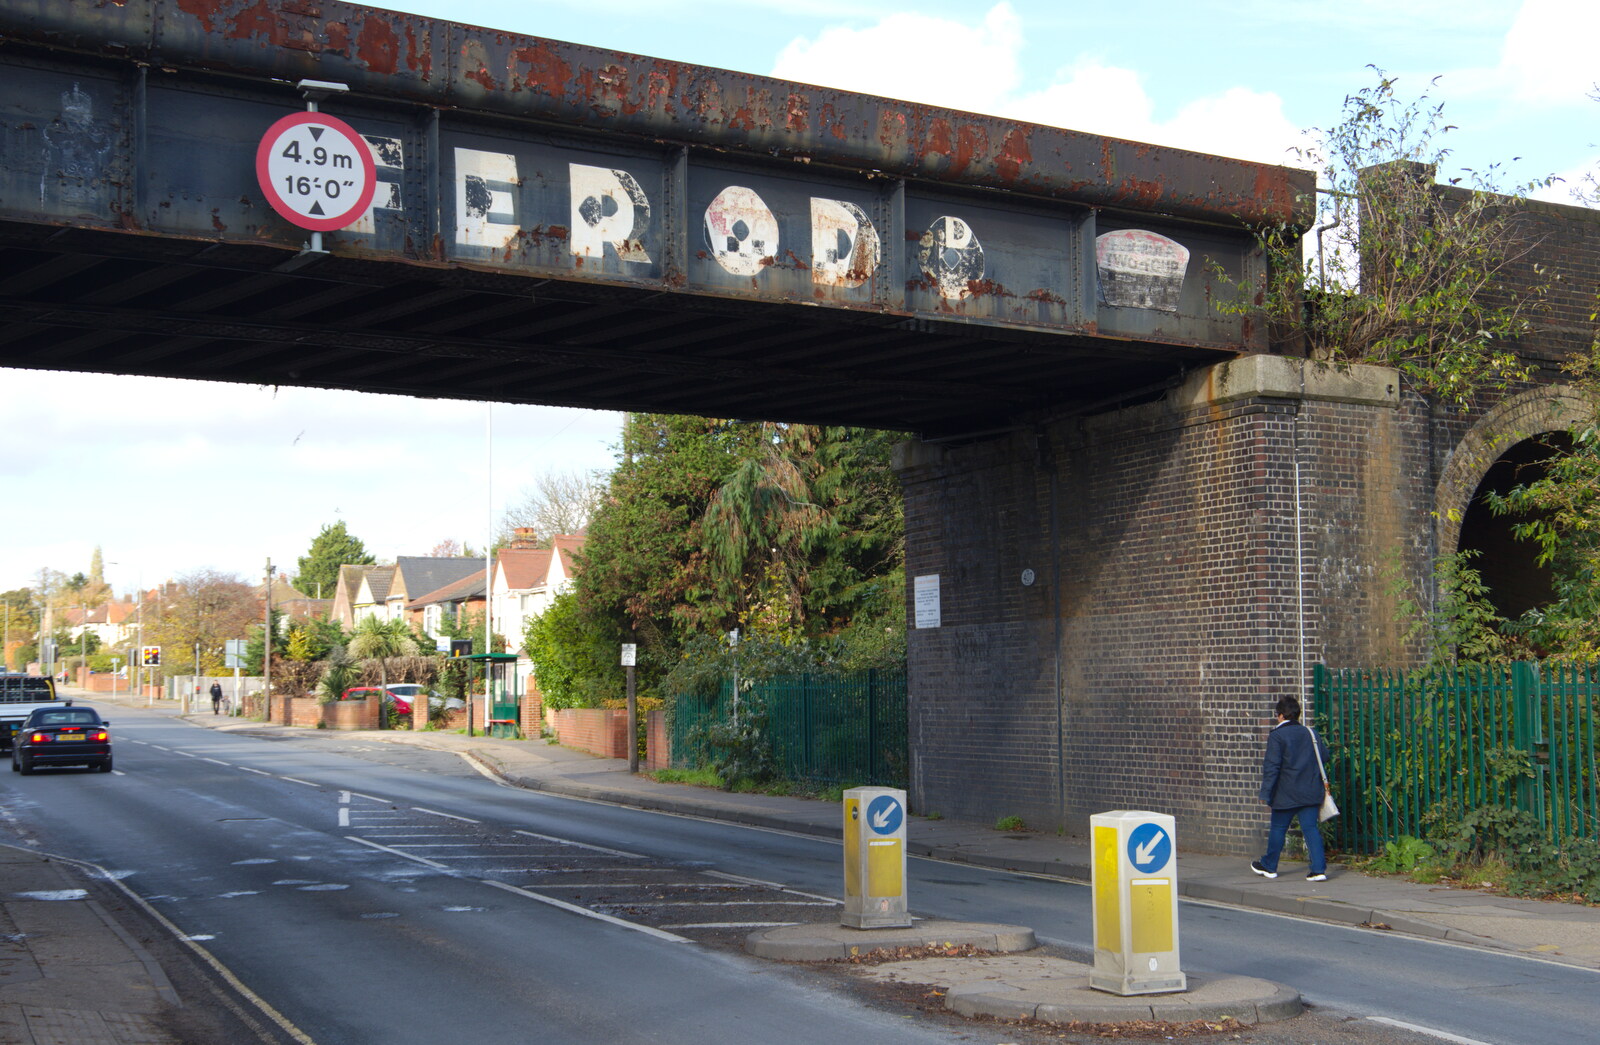 The Ferodo bridge on Norwich Road from Exam Day Dereliction, Ipswich, Suffolk - 13th November 2019